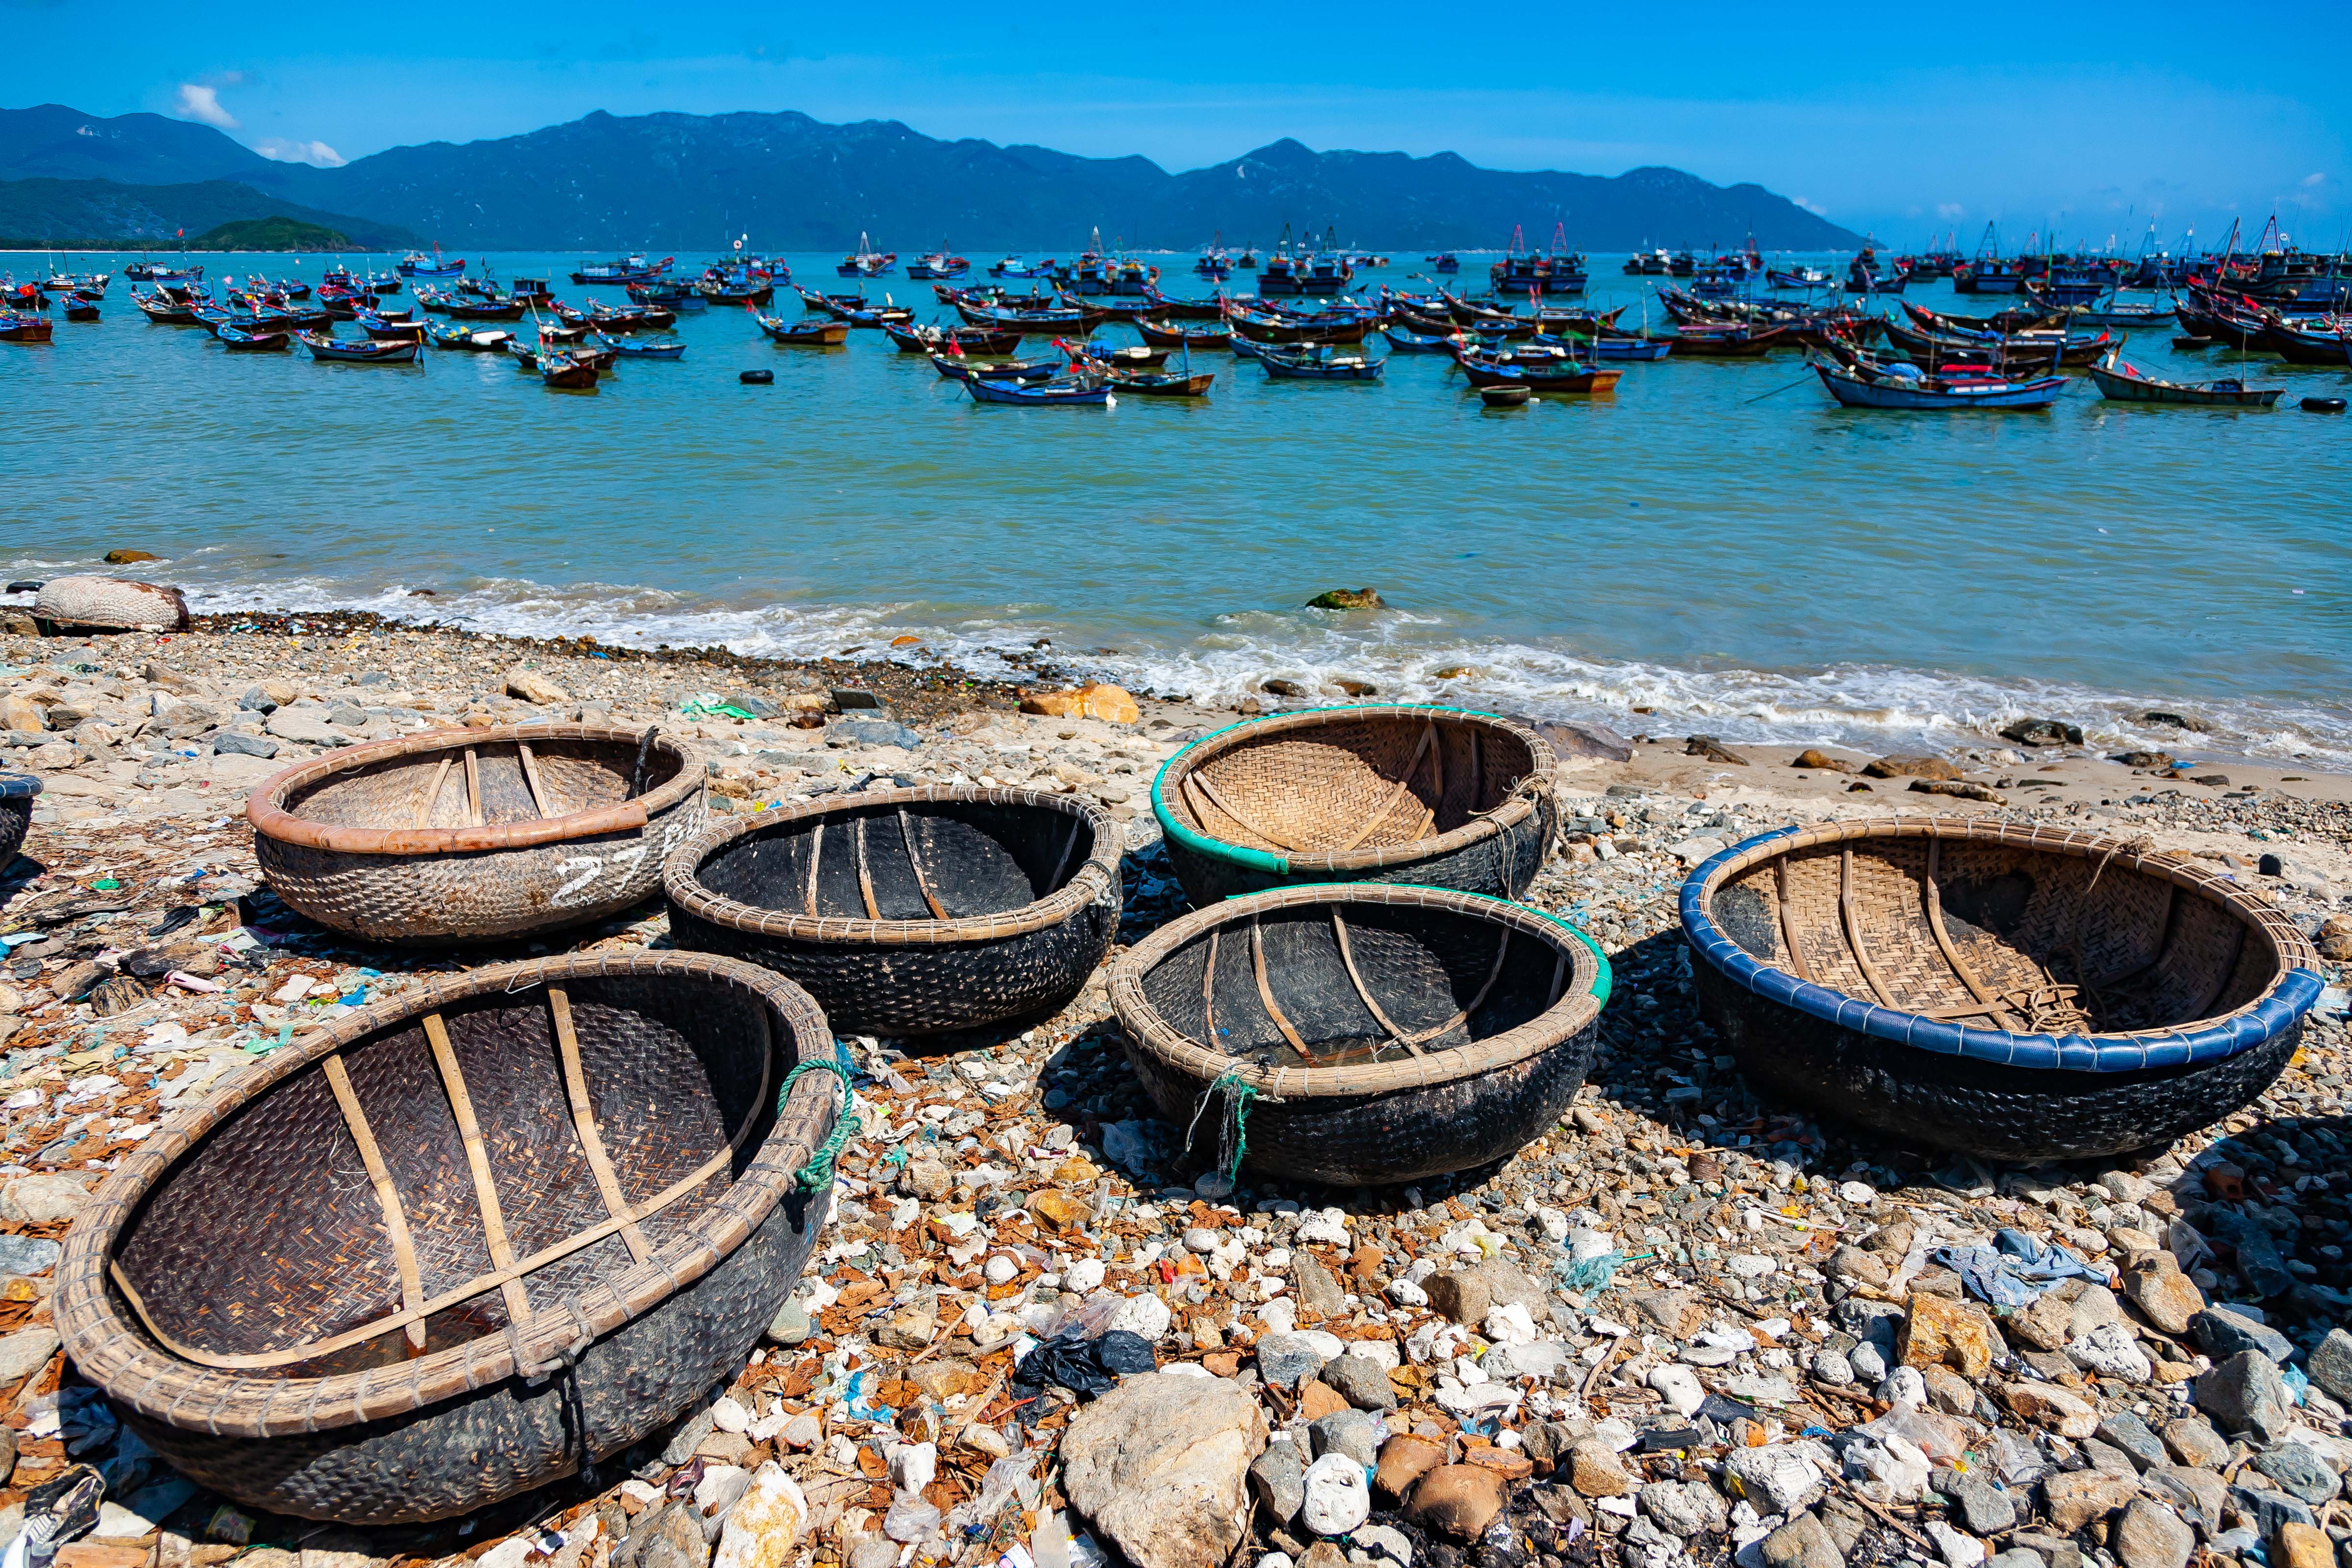 Vietnam, Khanh Hoa Prov, Fishing Baskets And Boats, 2010, IMG 2258